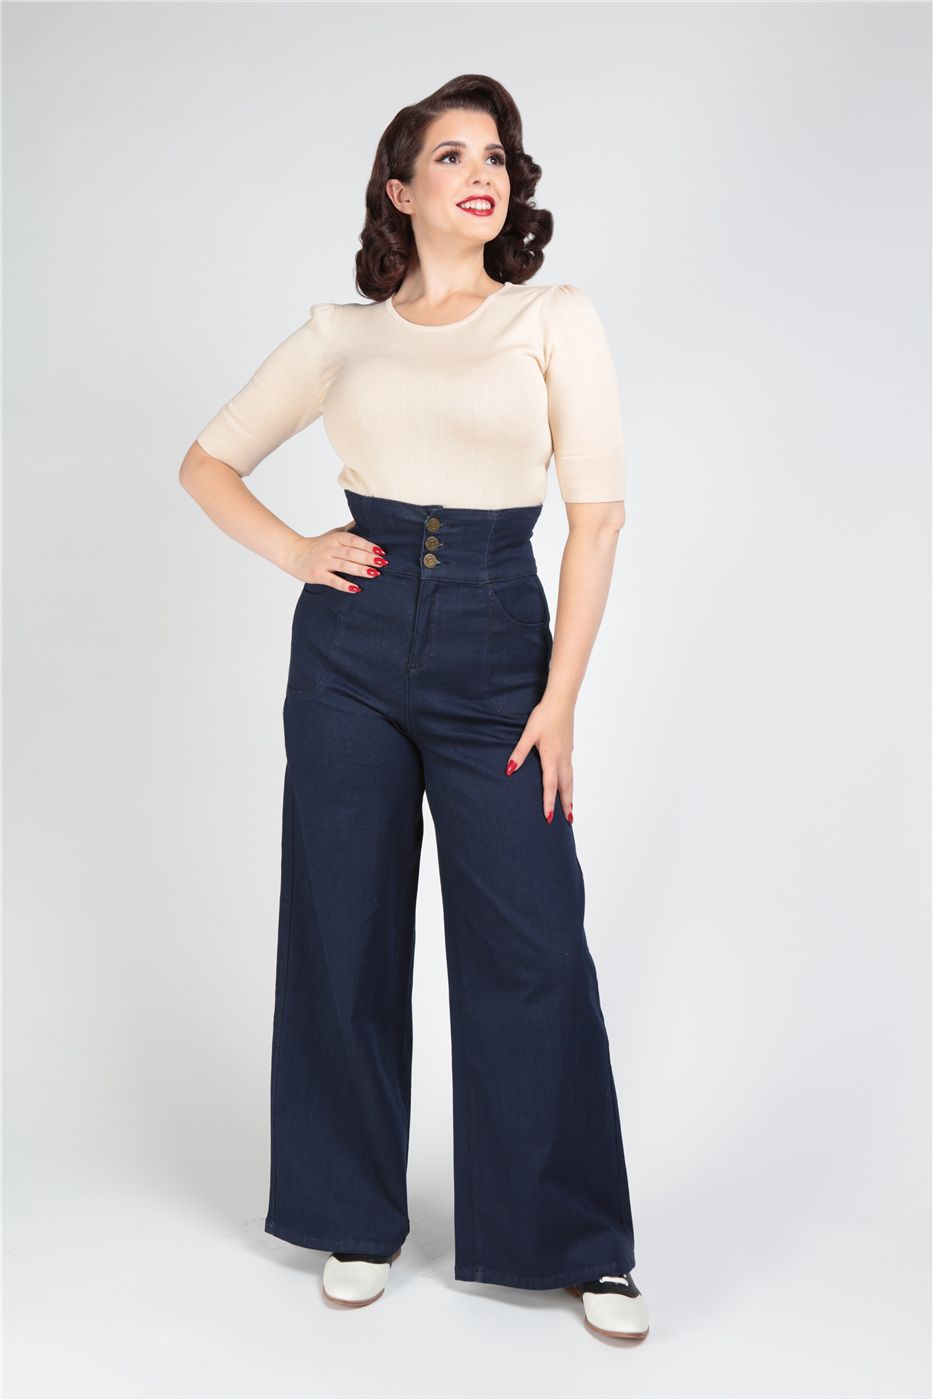 ccfreyanabbb_jeans-pantalon-retro-pin-up-50-s-rockabilly-taille-haute-bretelles-freya